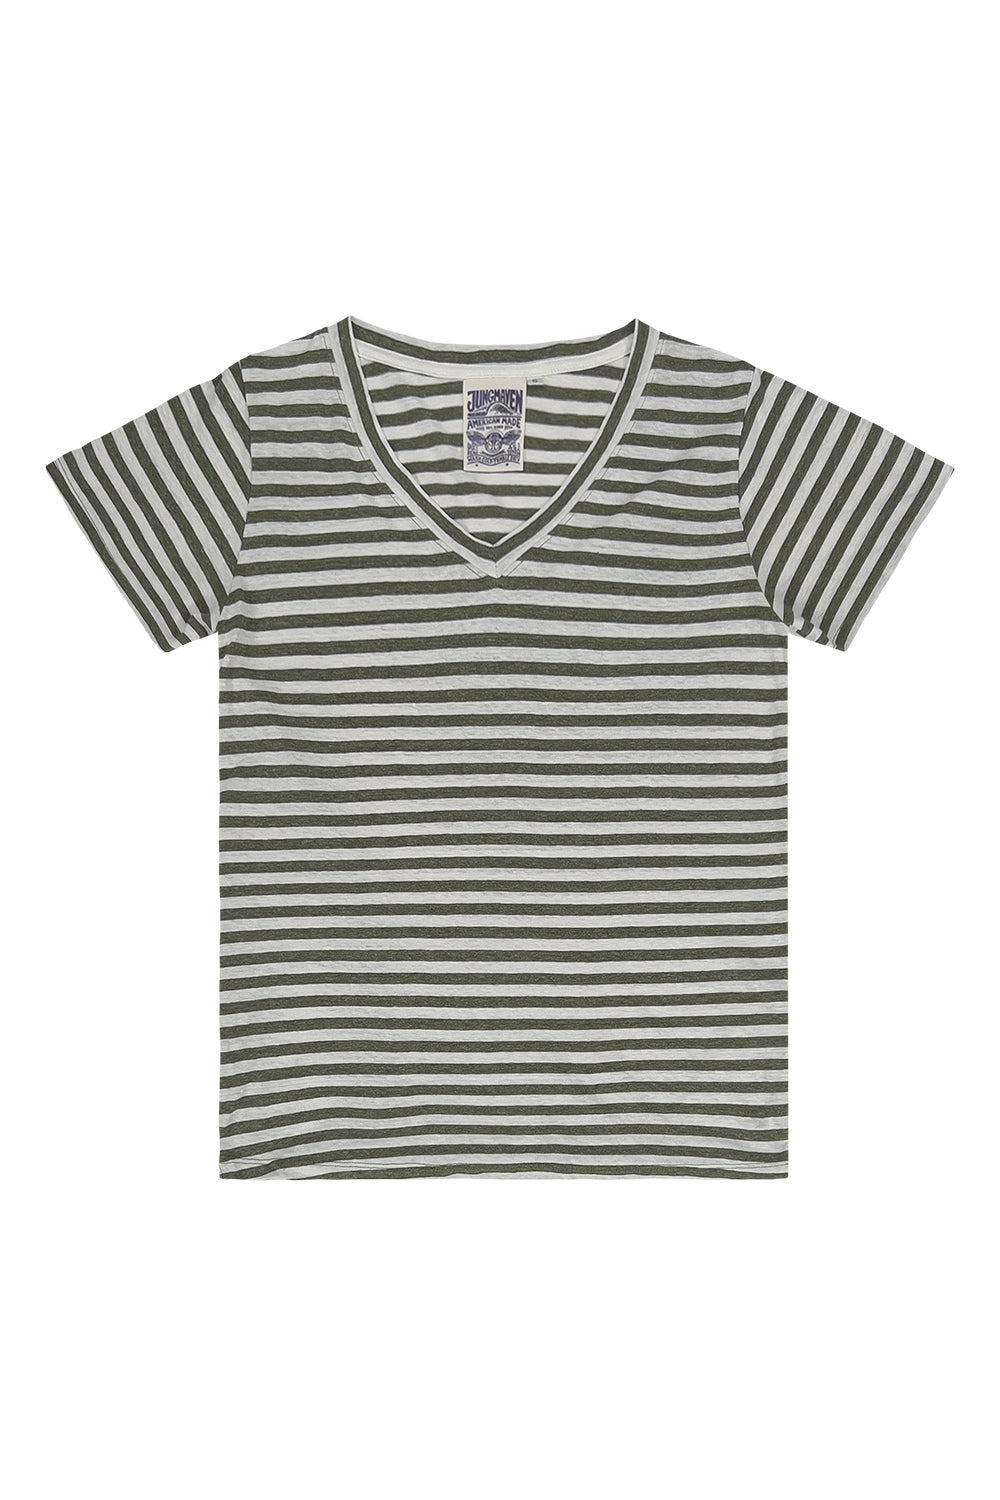 Stripe Paige V-neck | Jungmaven Hemp Clothing & Accessories / Color: Olive/White Stripe